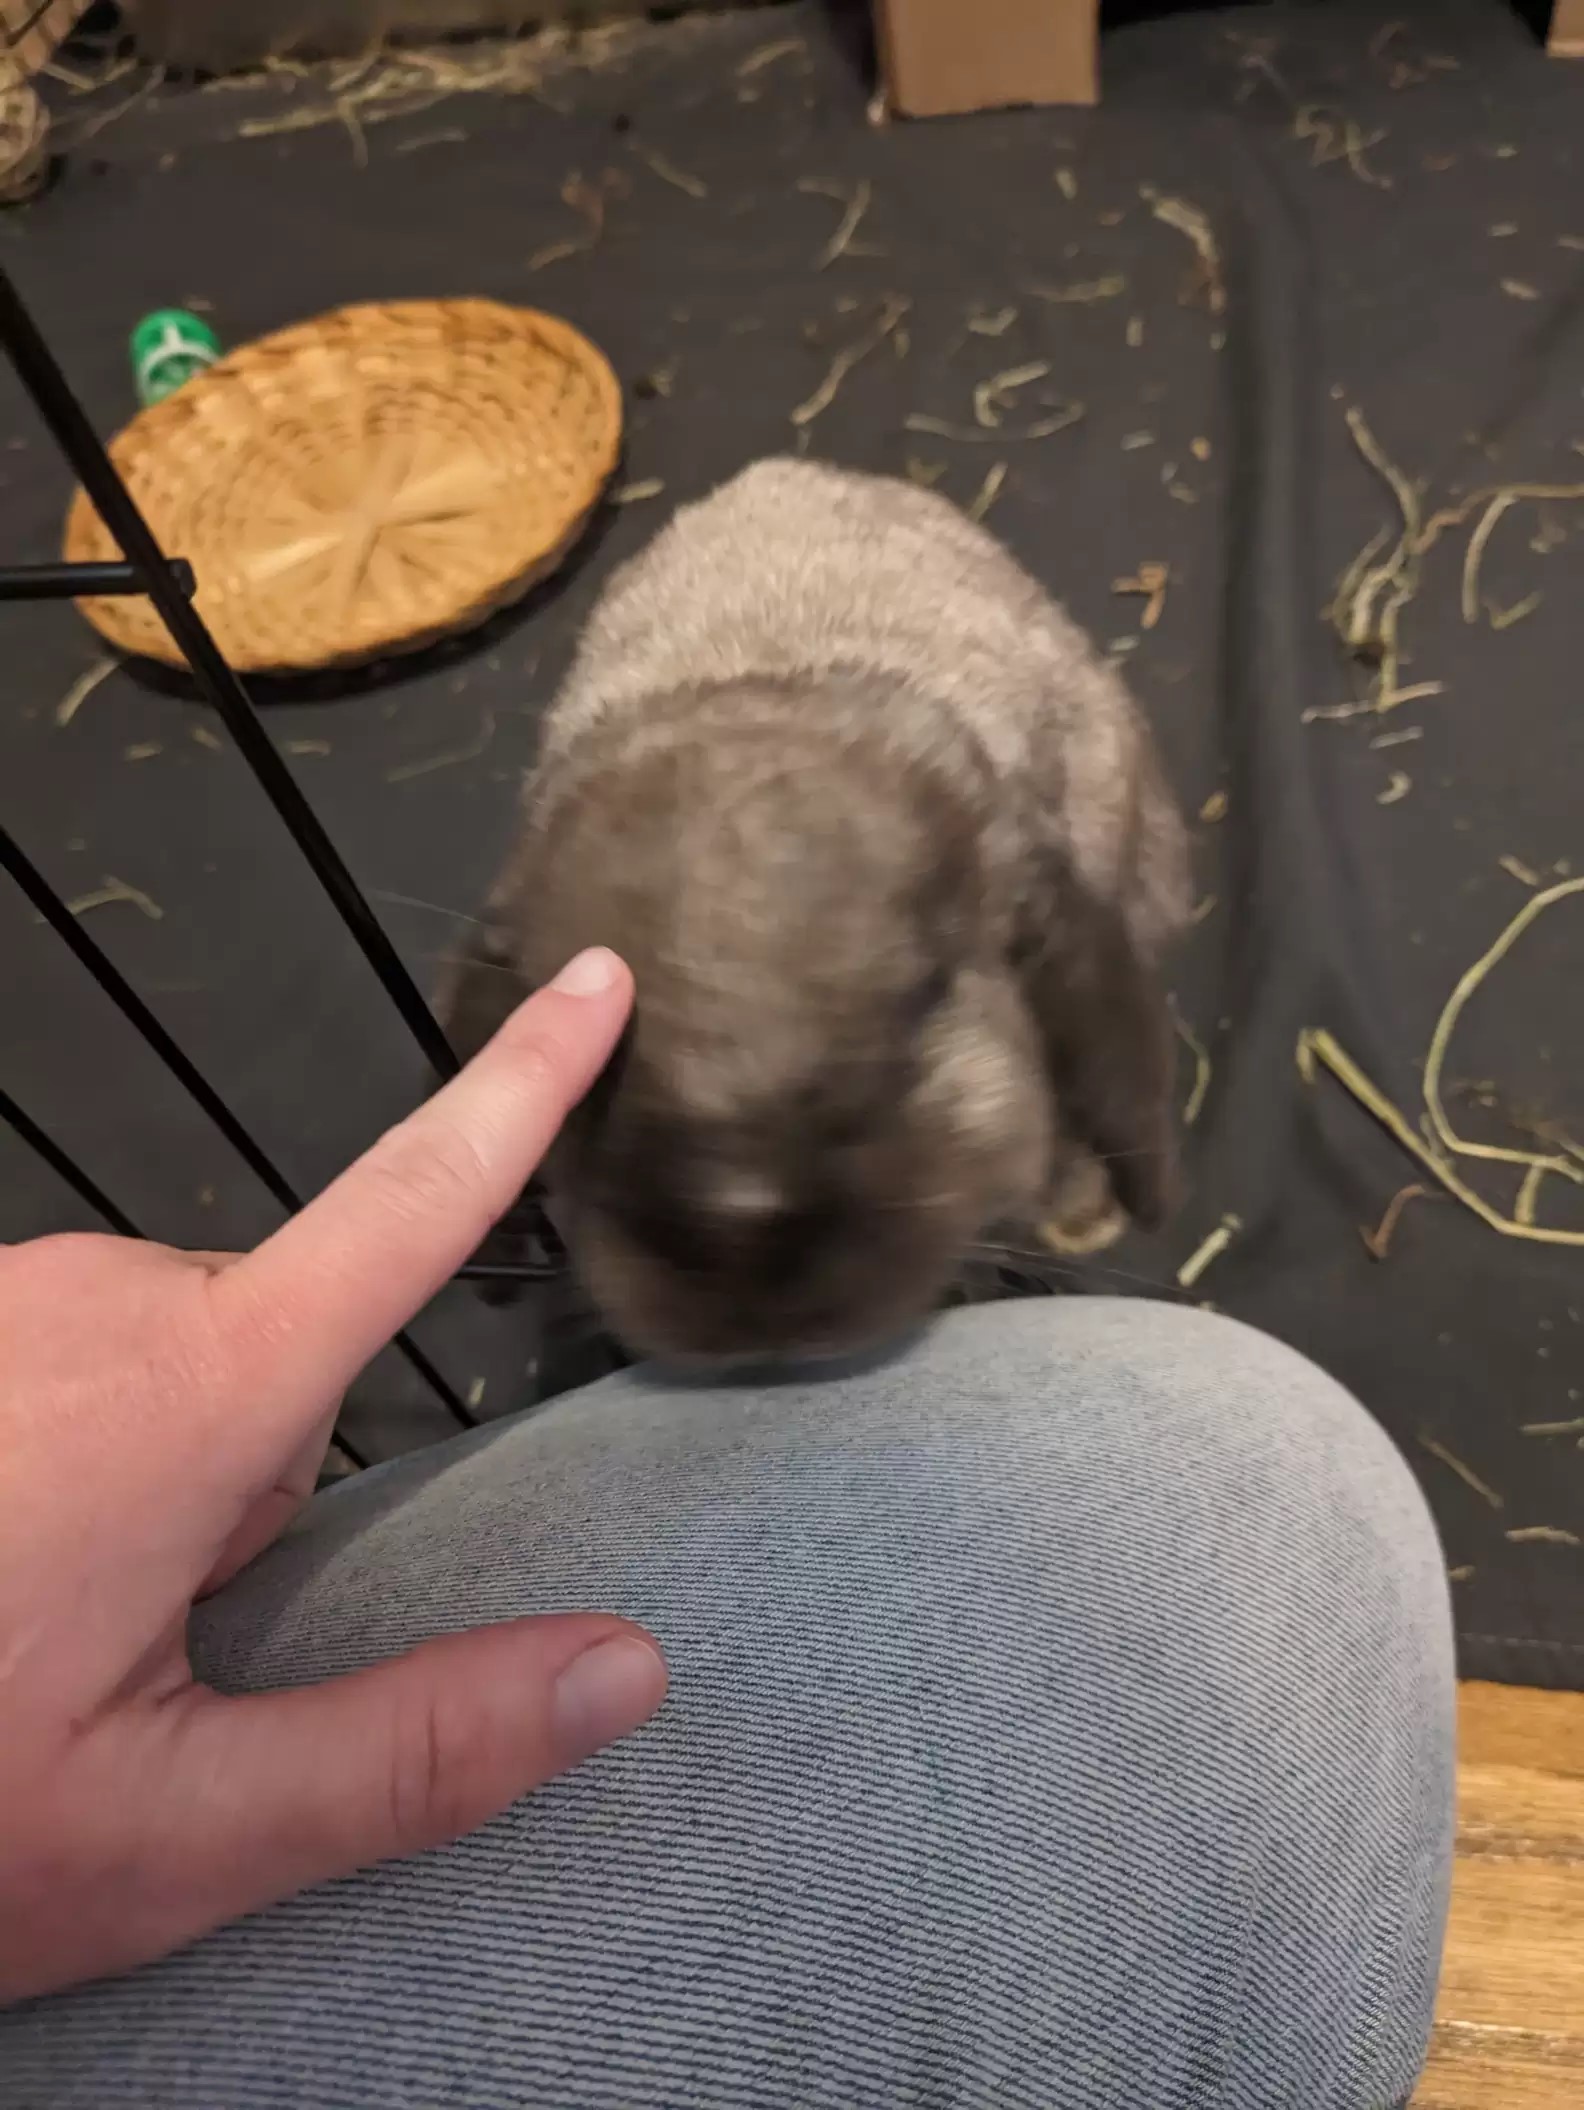 finger touching the animal